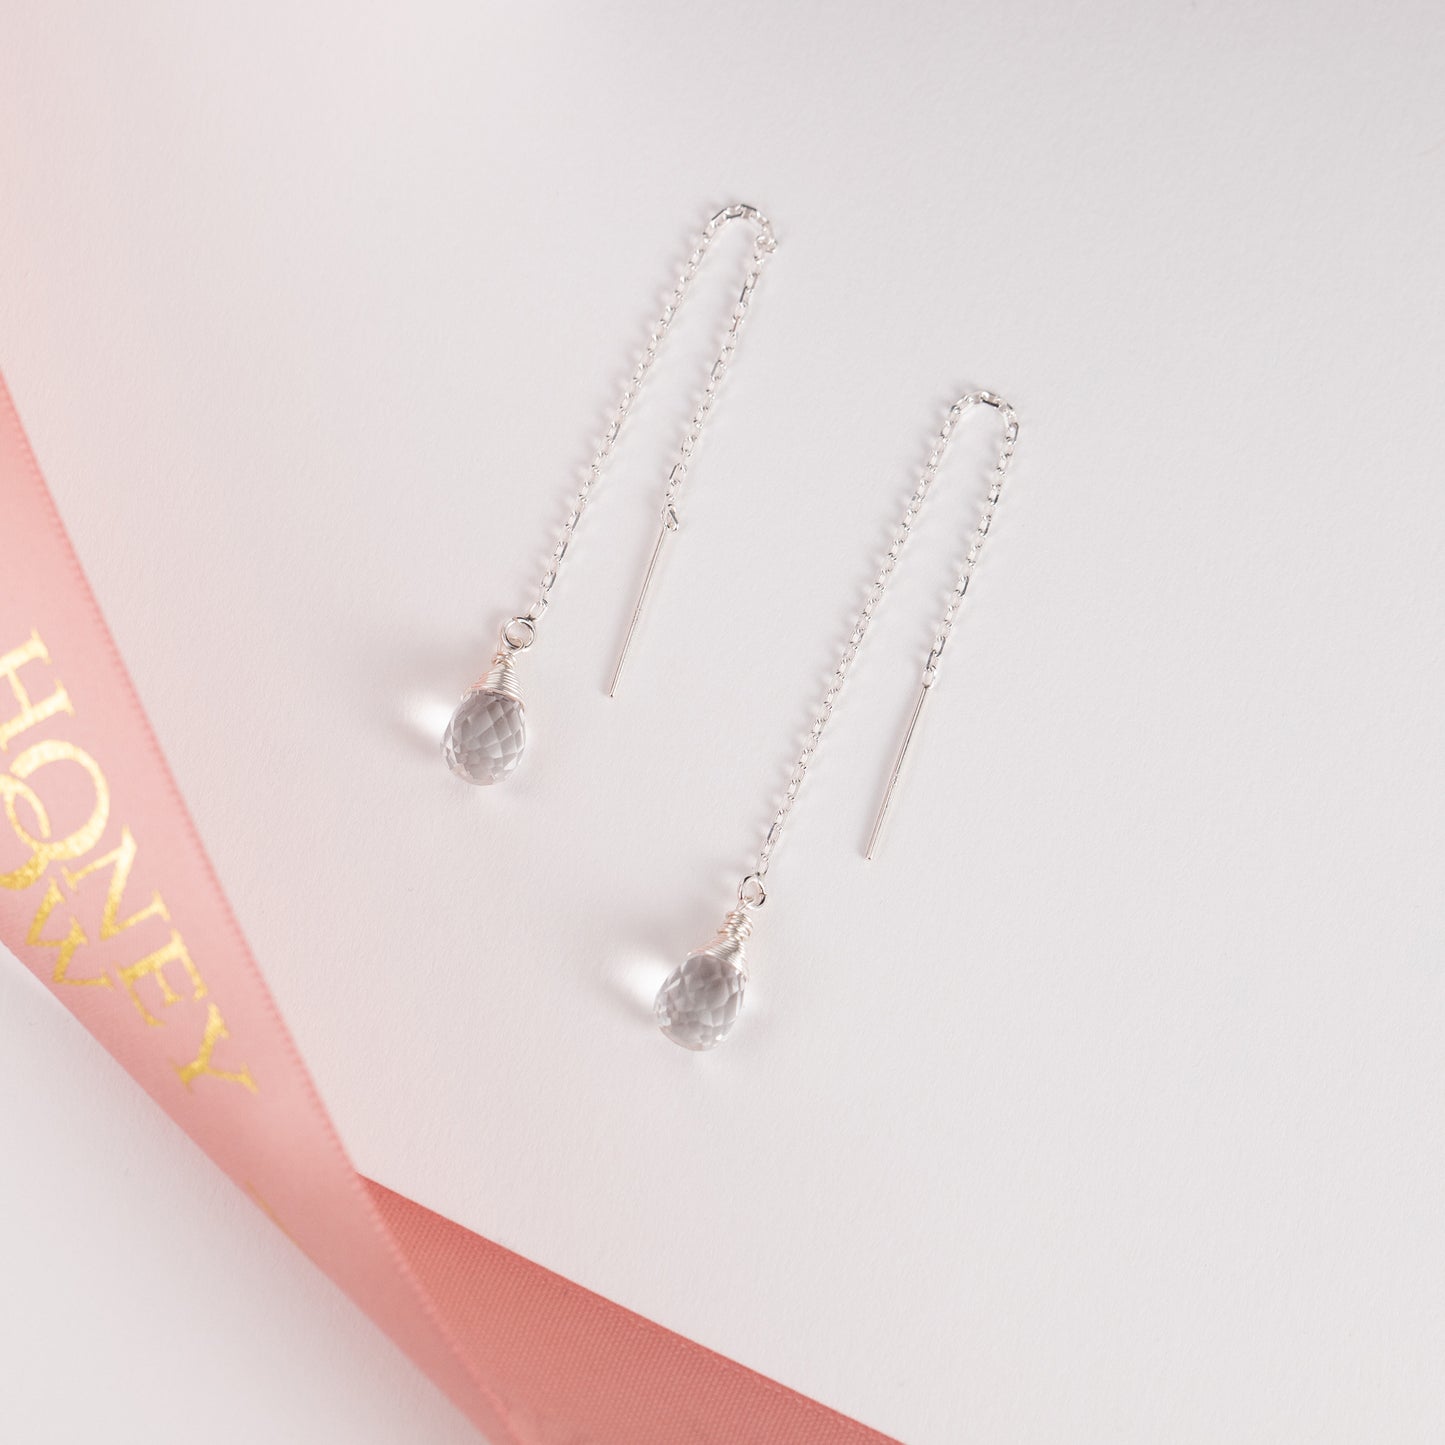 April Birthstone Threader Earrings - Rock Crystal - Silver & Gold